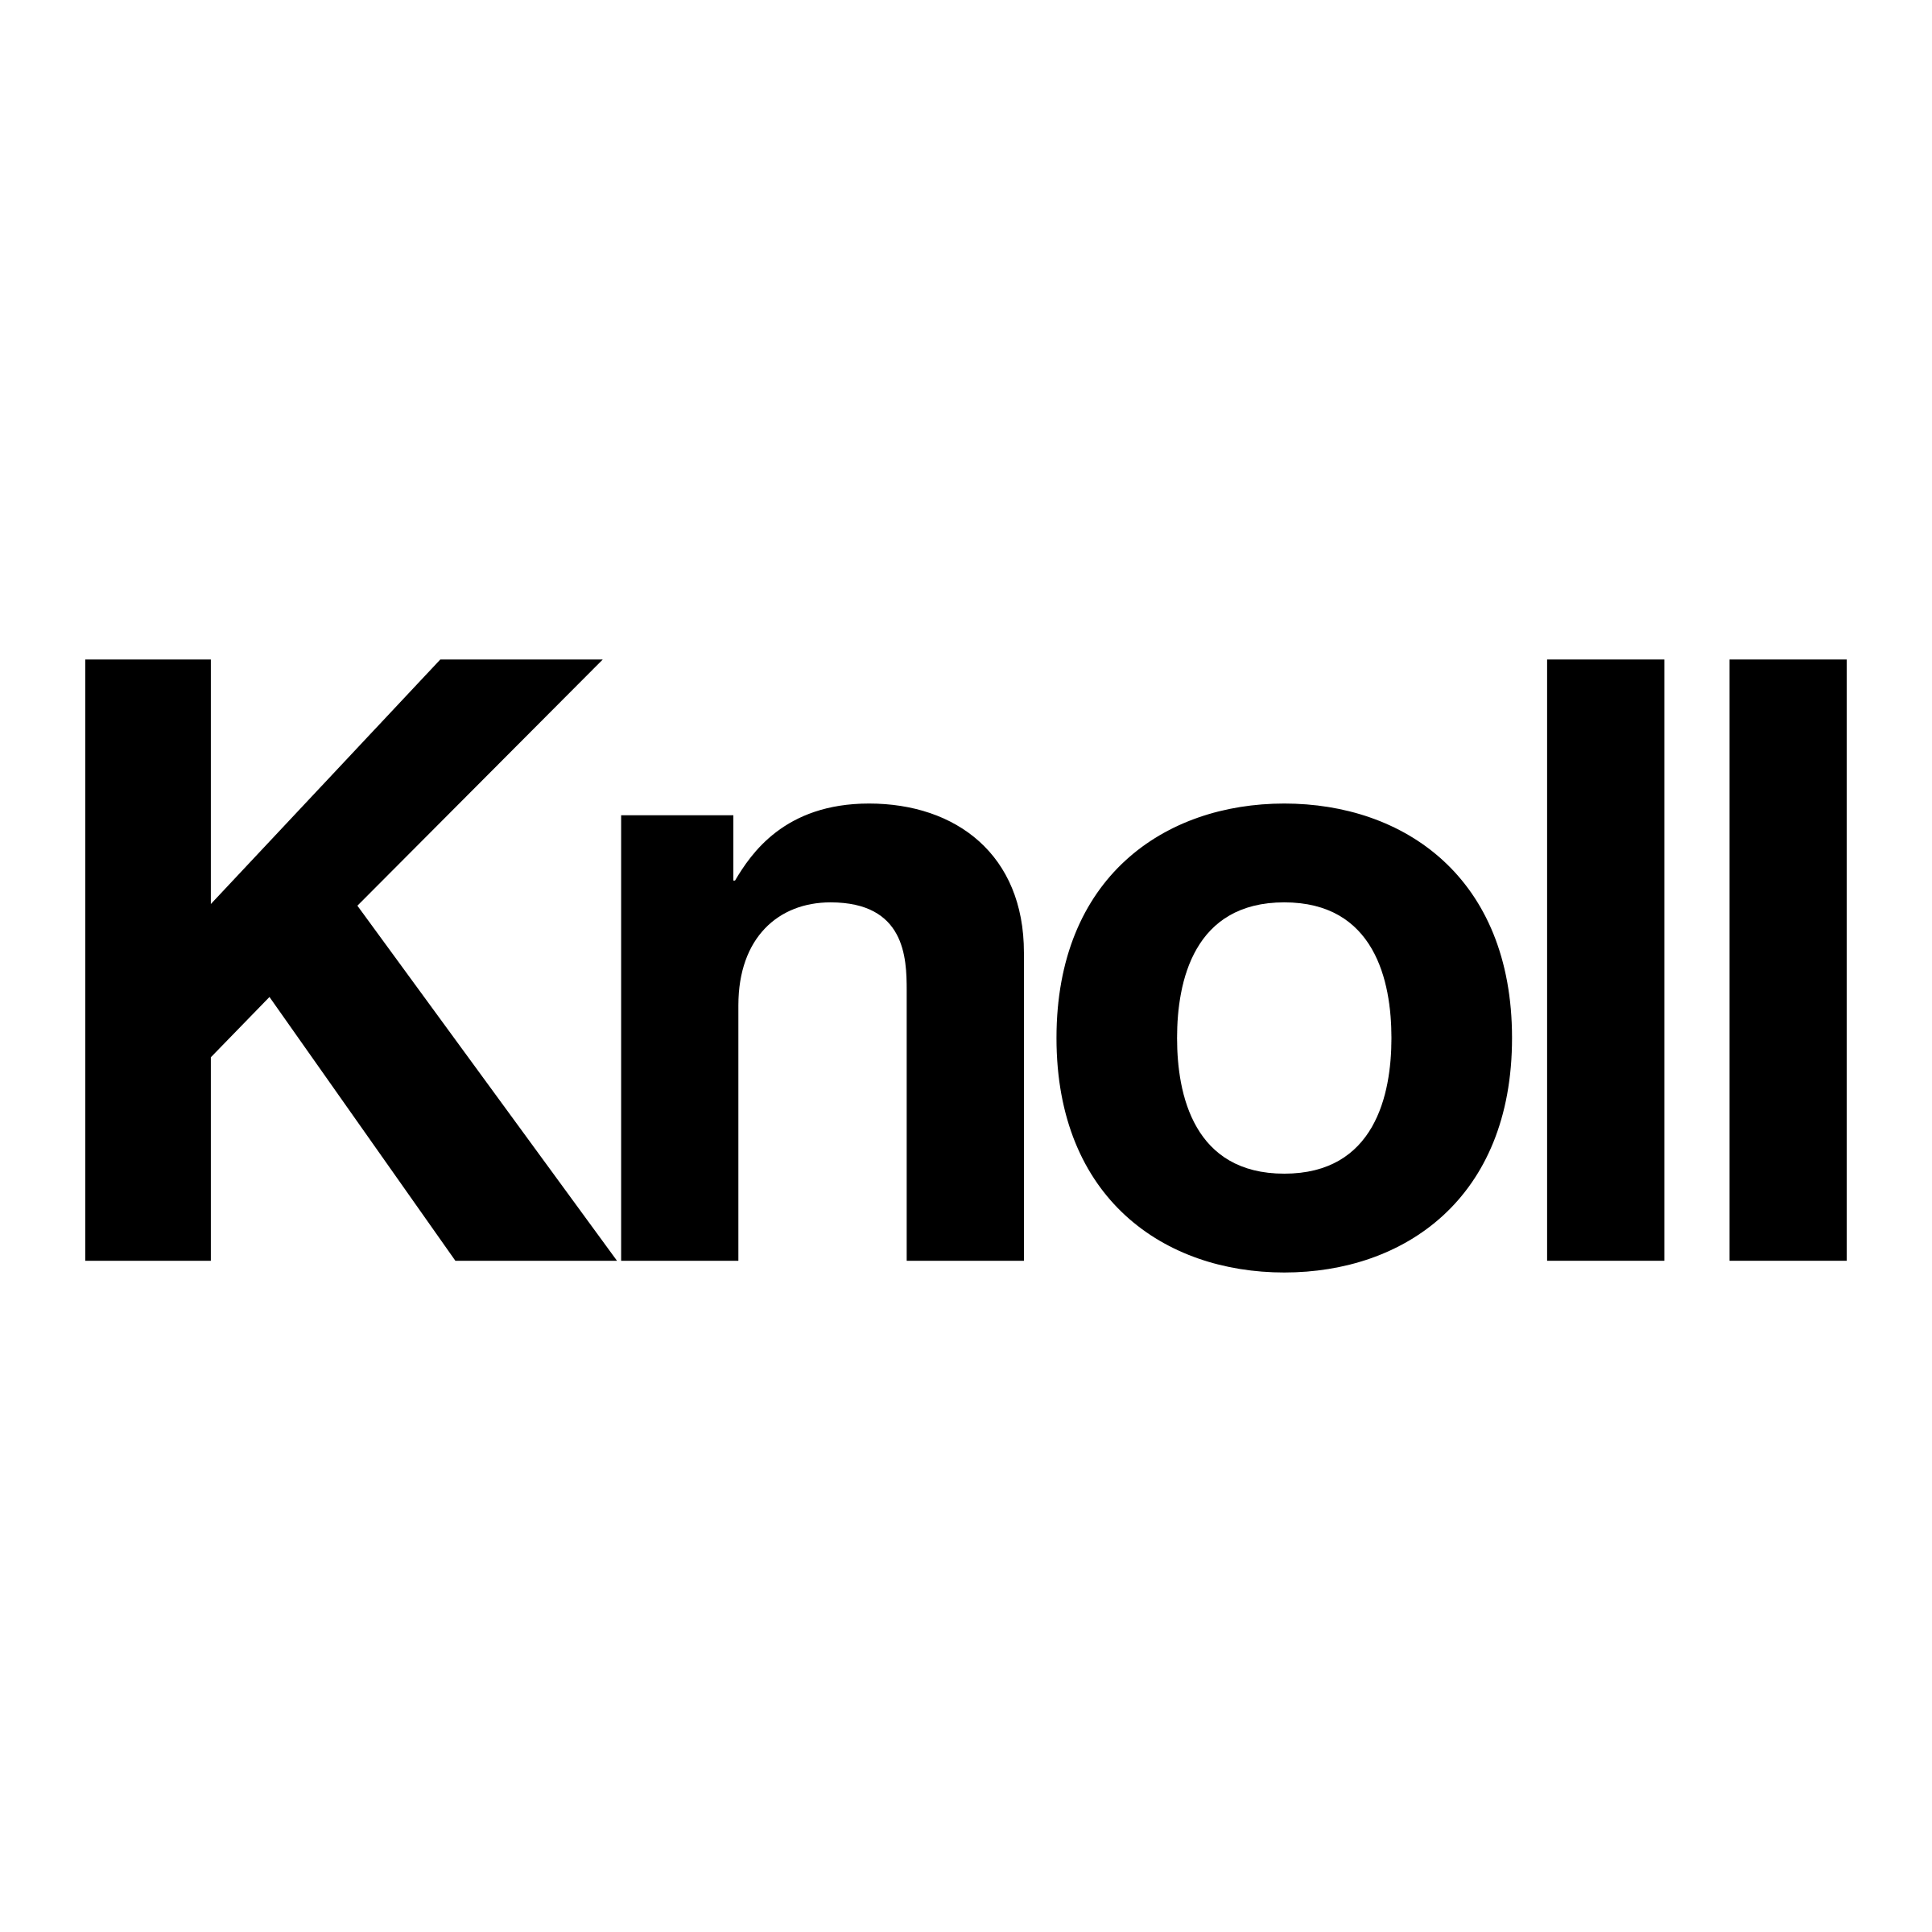 Knoll Logo - Knoll Logo PNG Transparent & SVG Vector - Freebie Supply